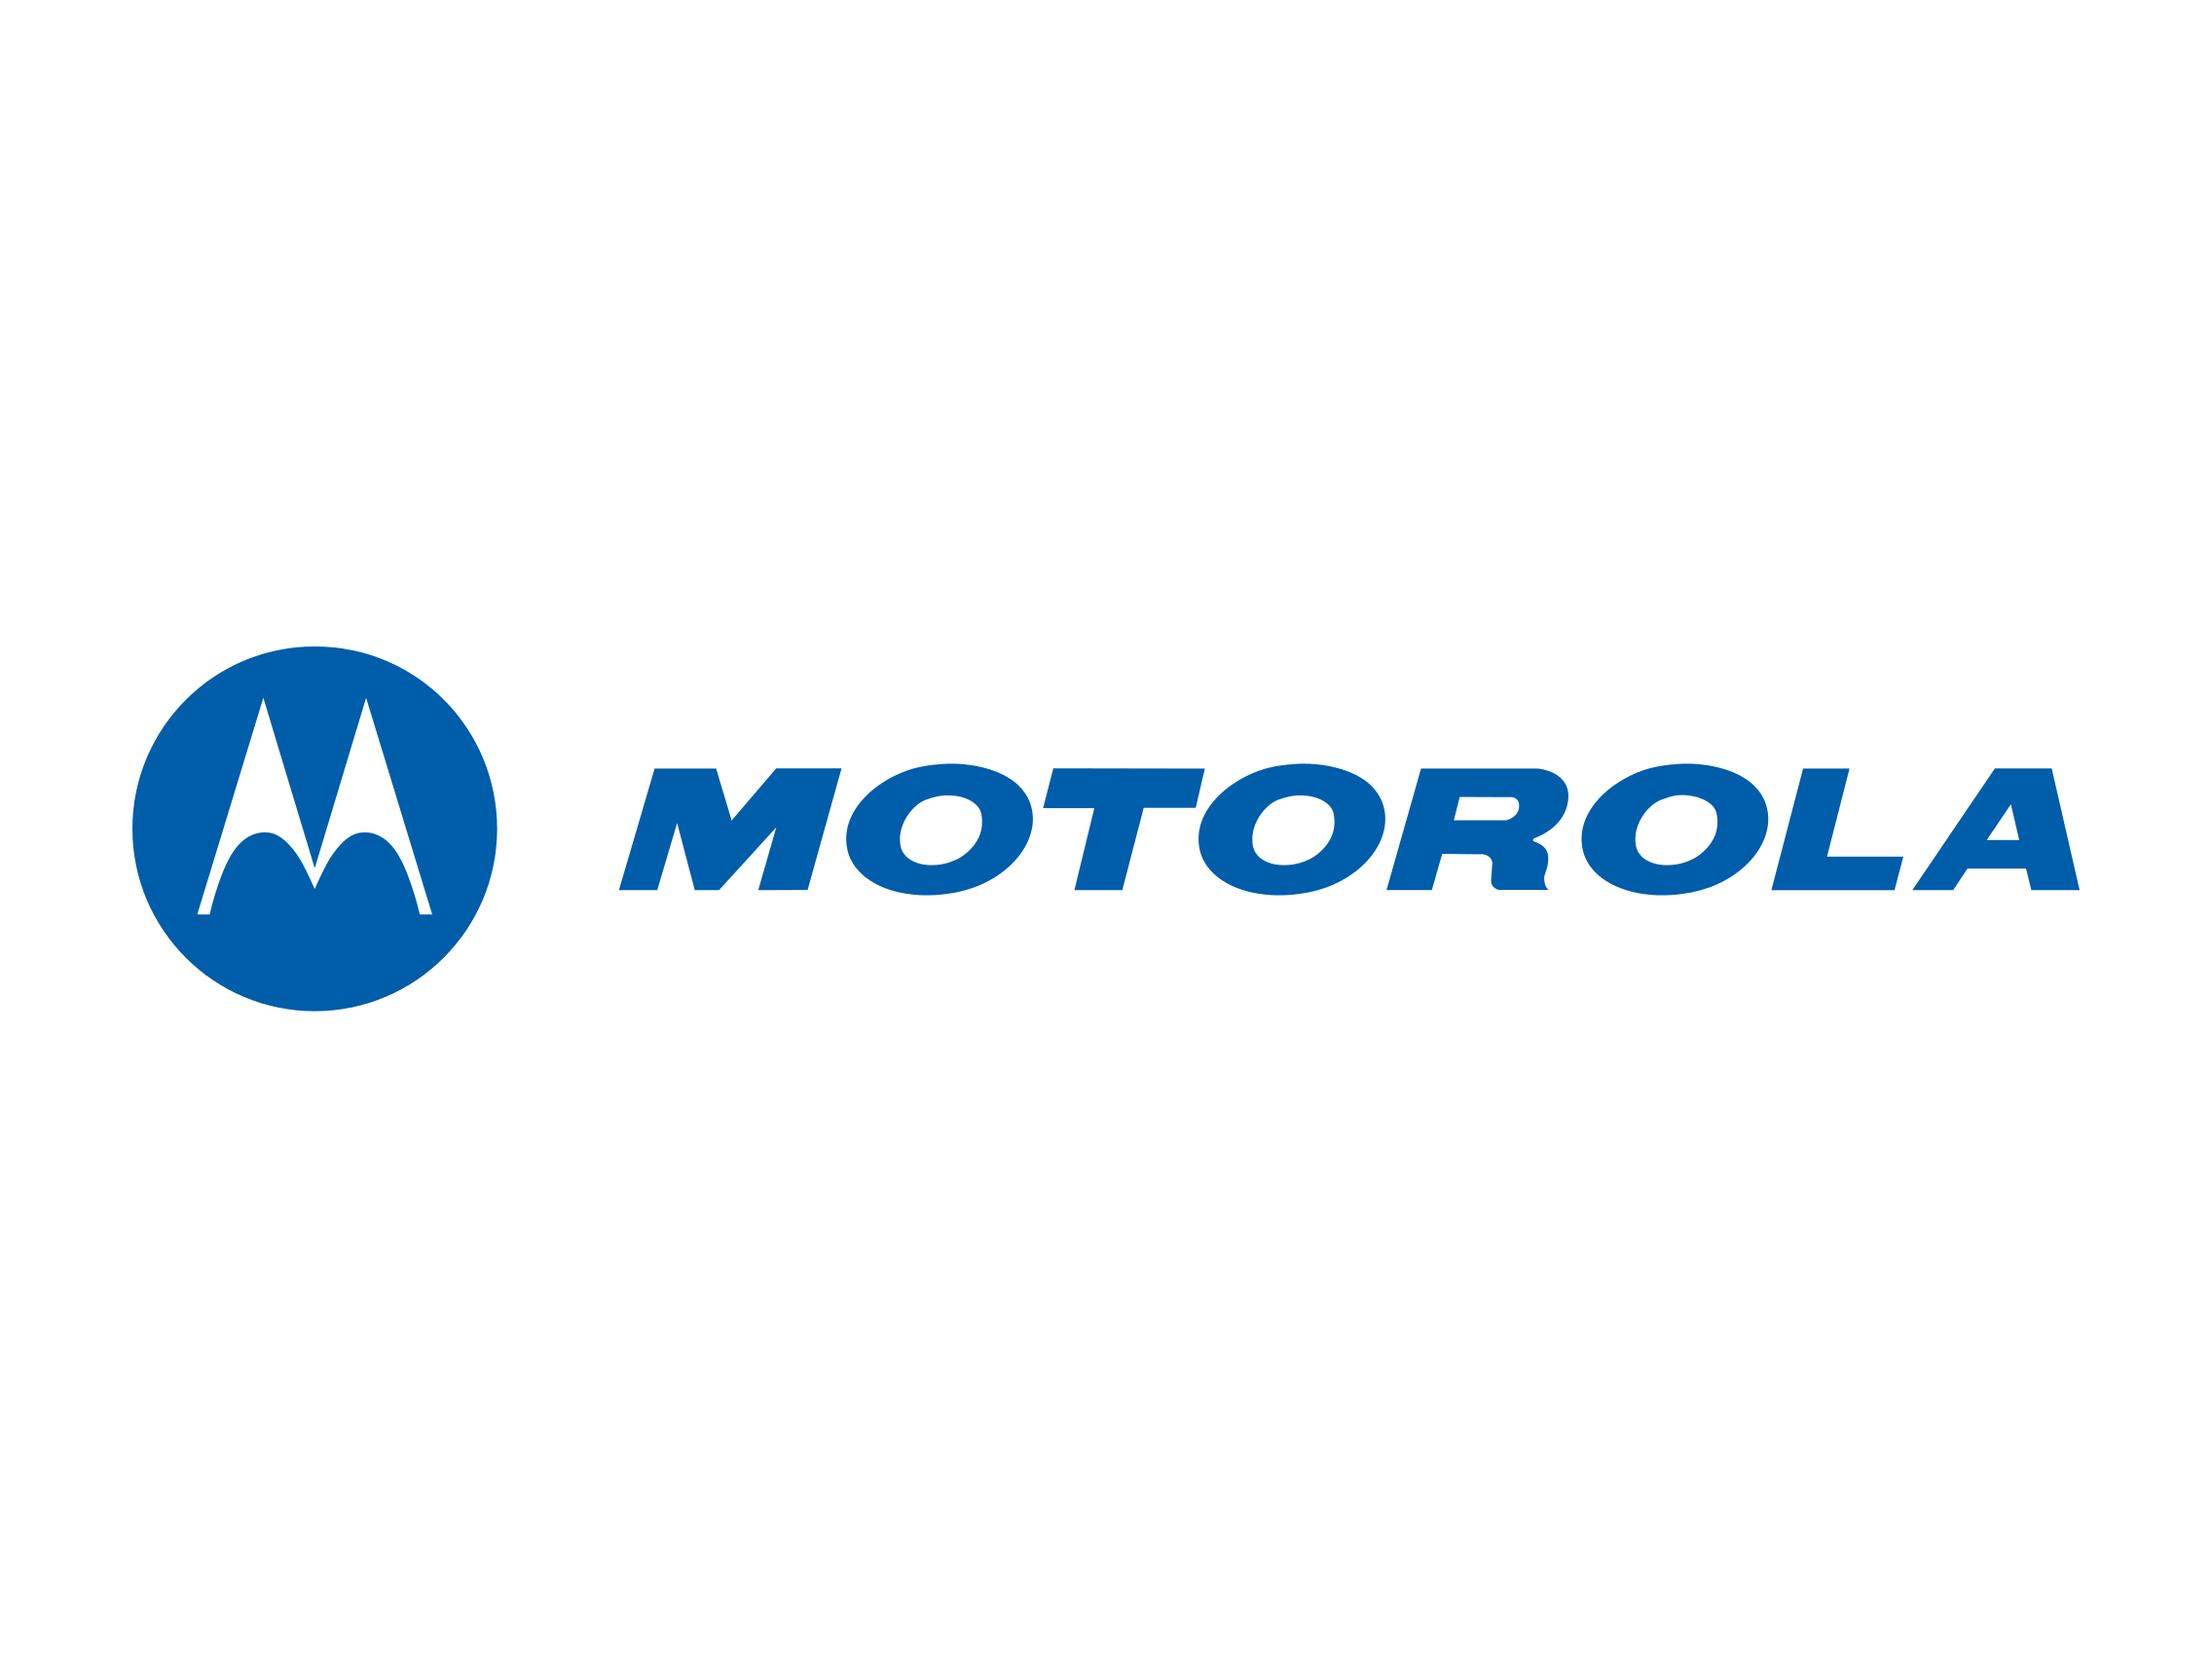 Motorola Semiconductor Products logo